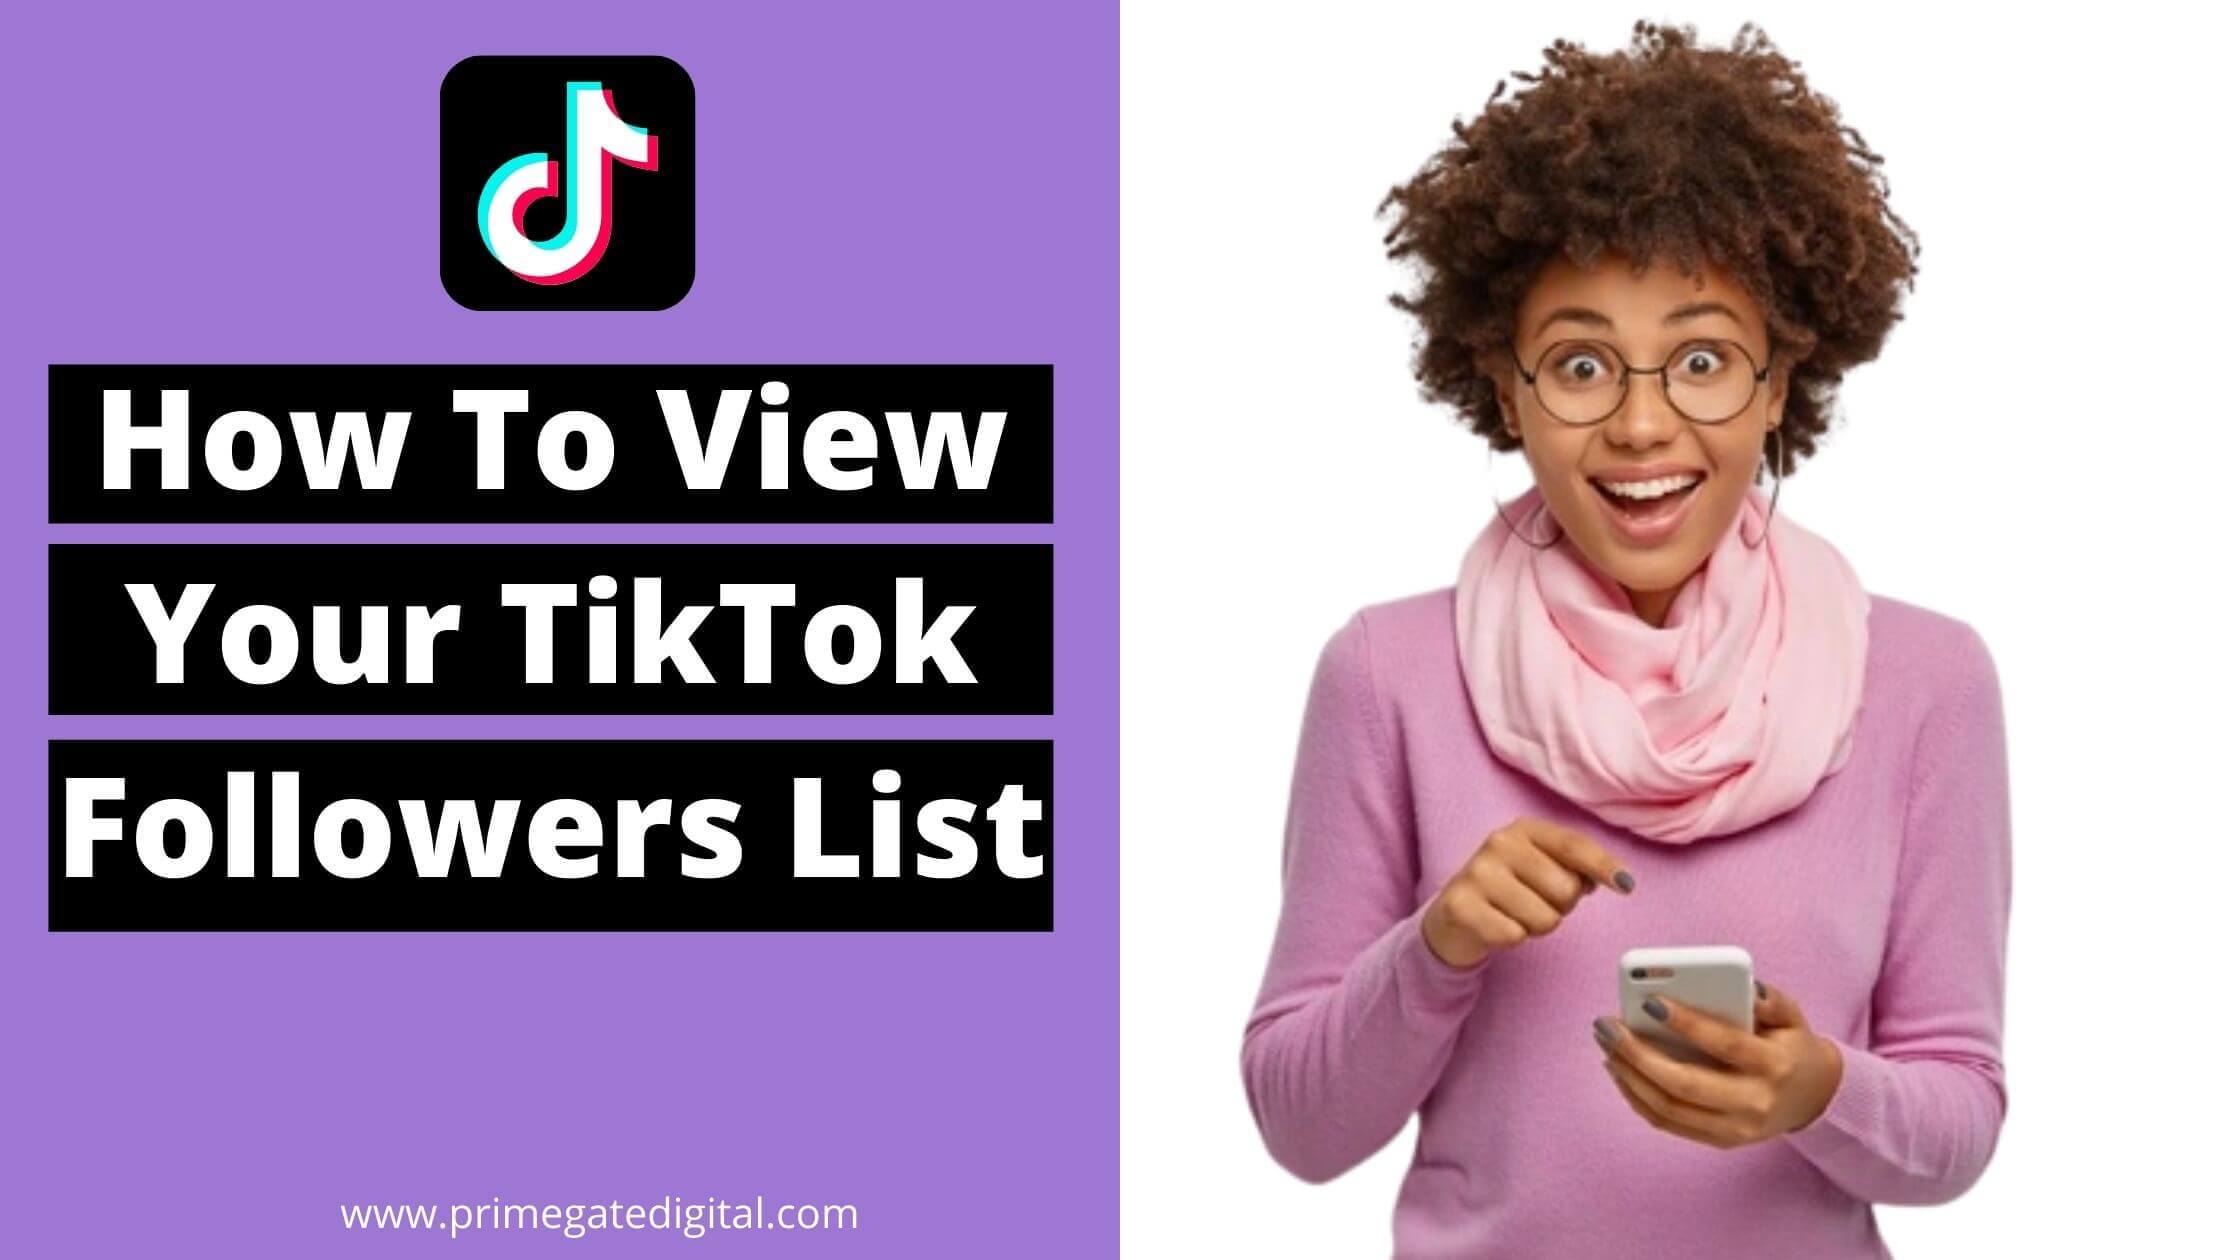 How to View Your TikTok Followers List